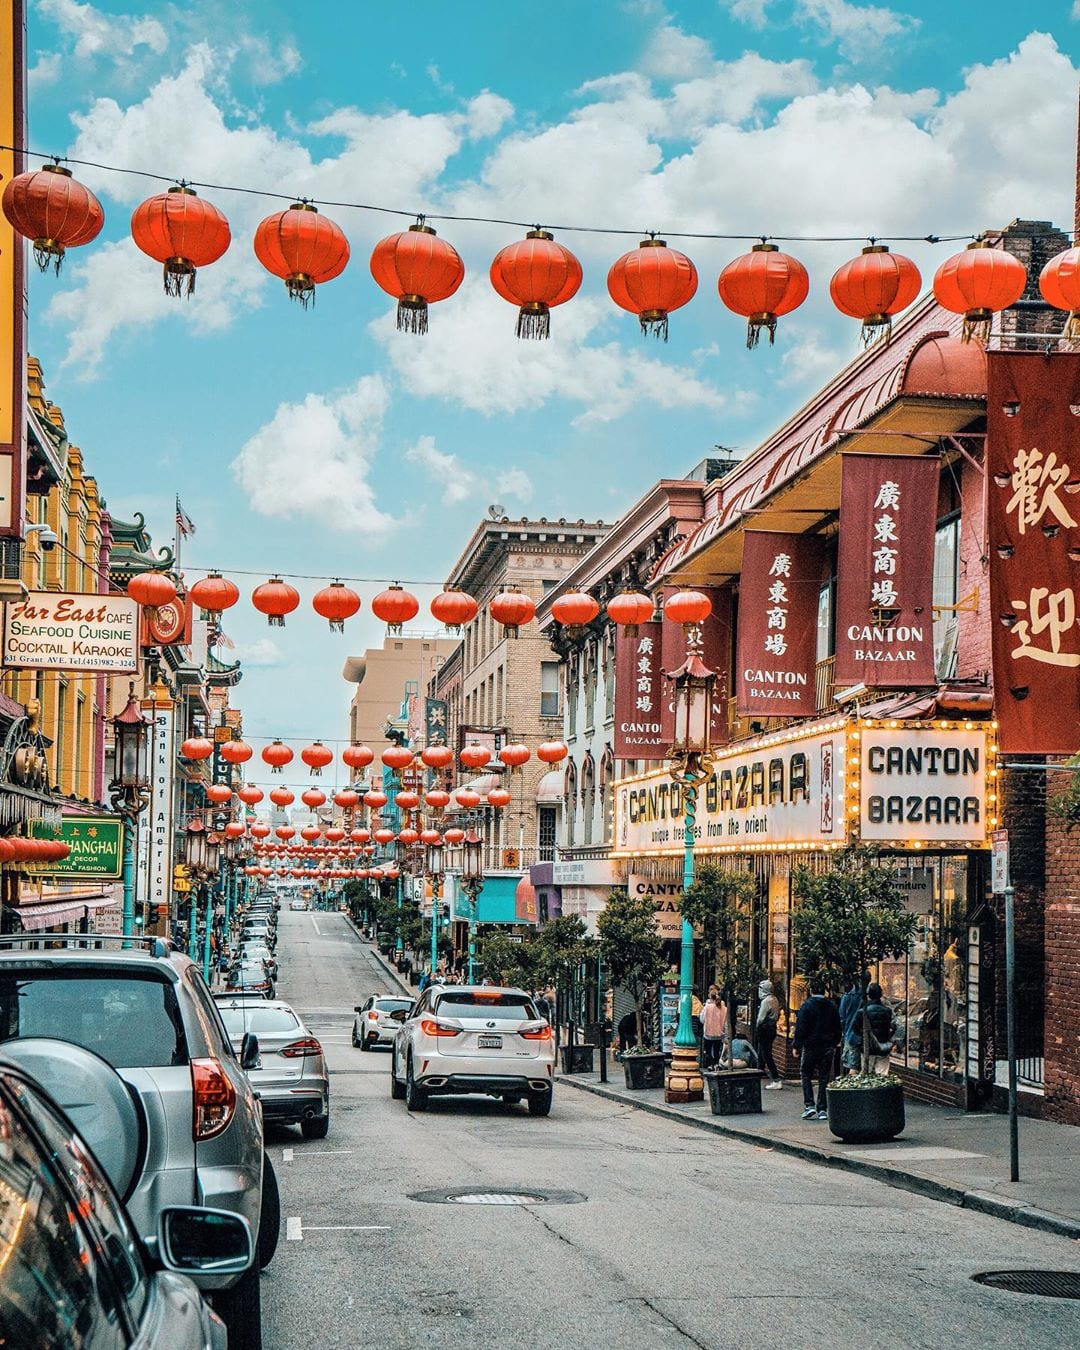 Chinatown's paper lanterns in San Francisco